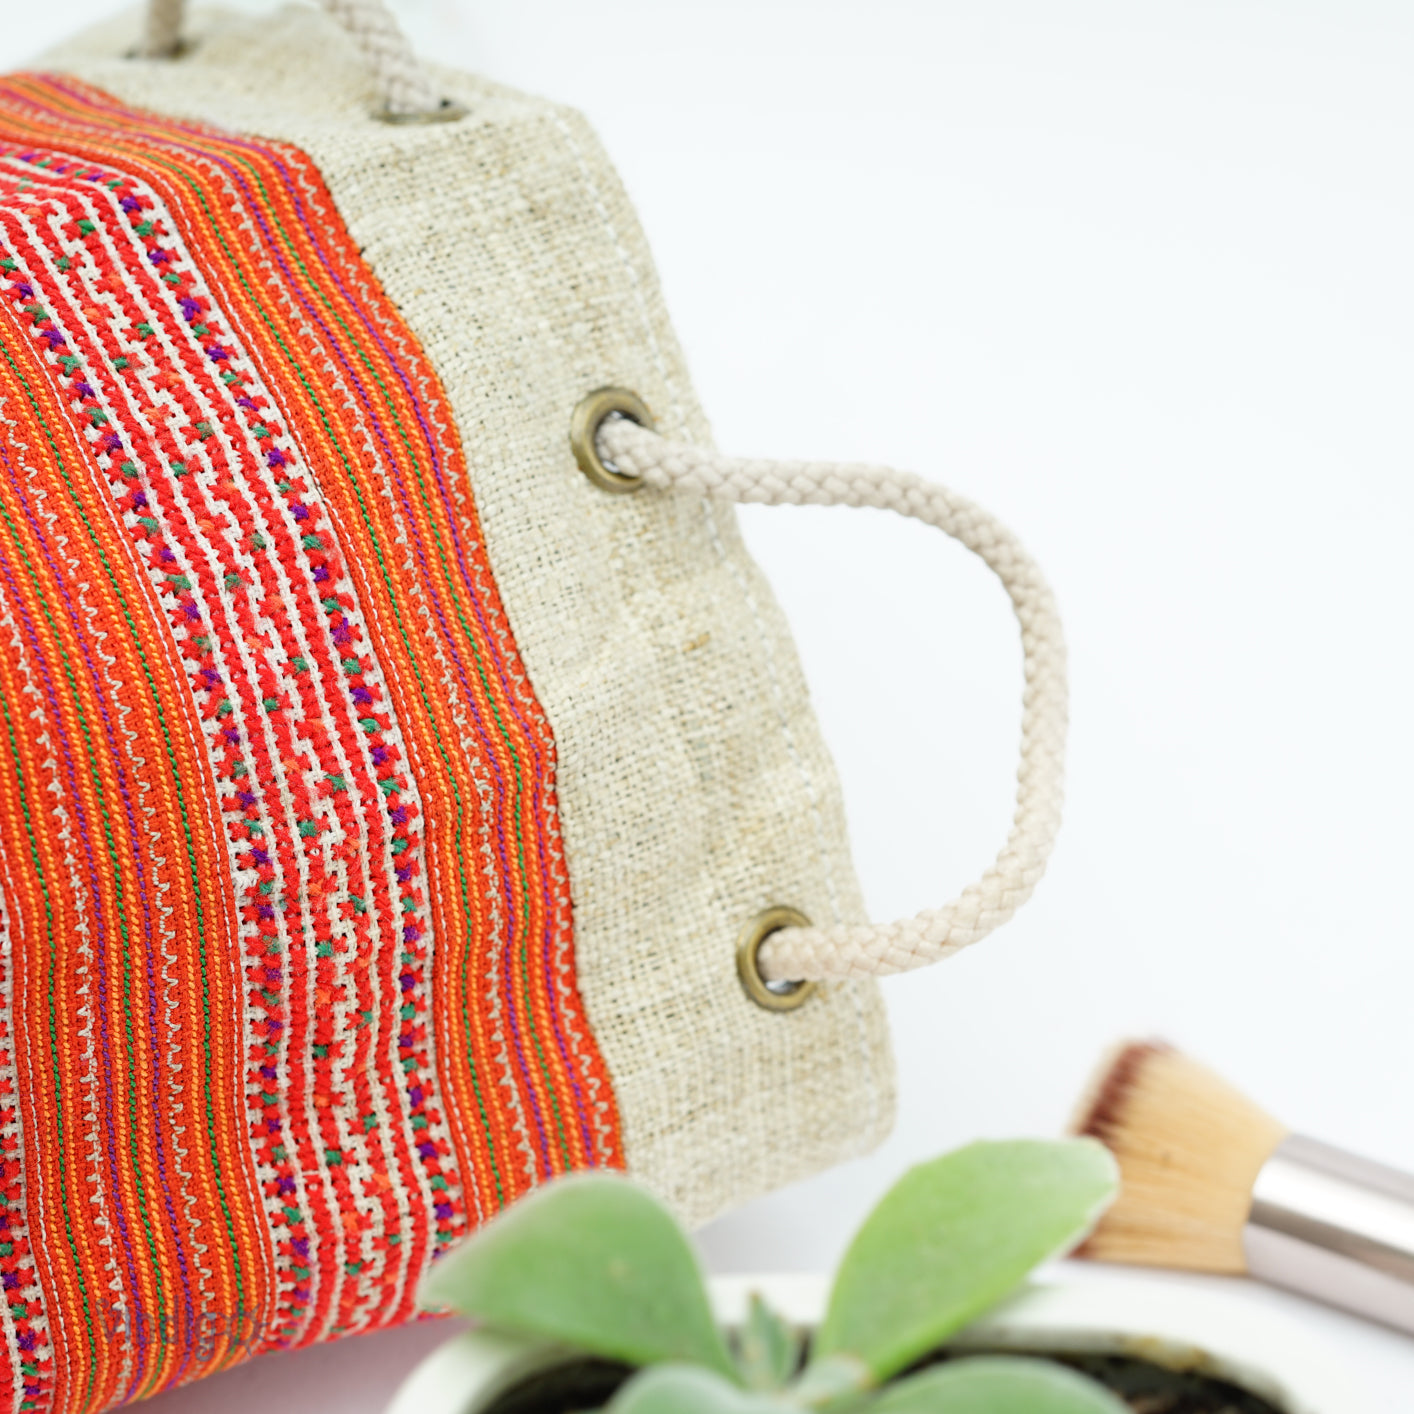 Mini hemp bag with string, red tribal pattern